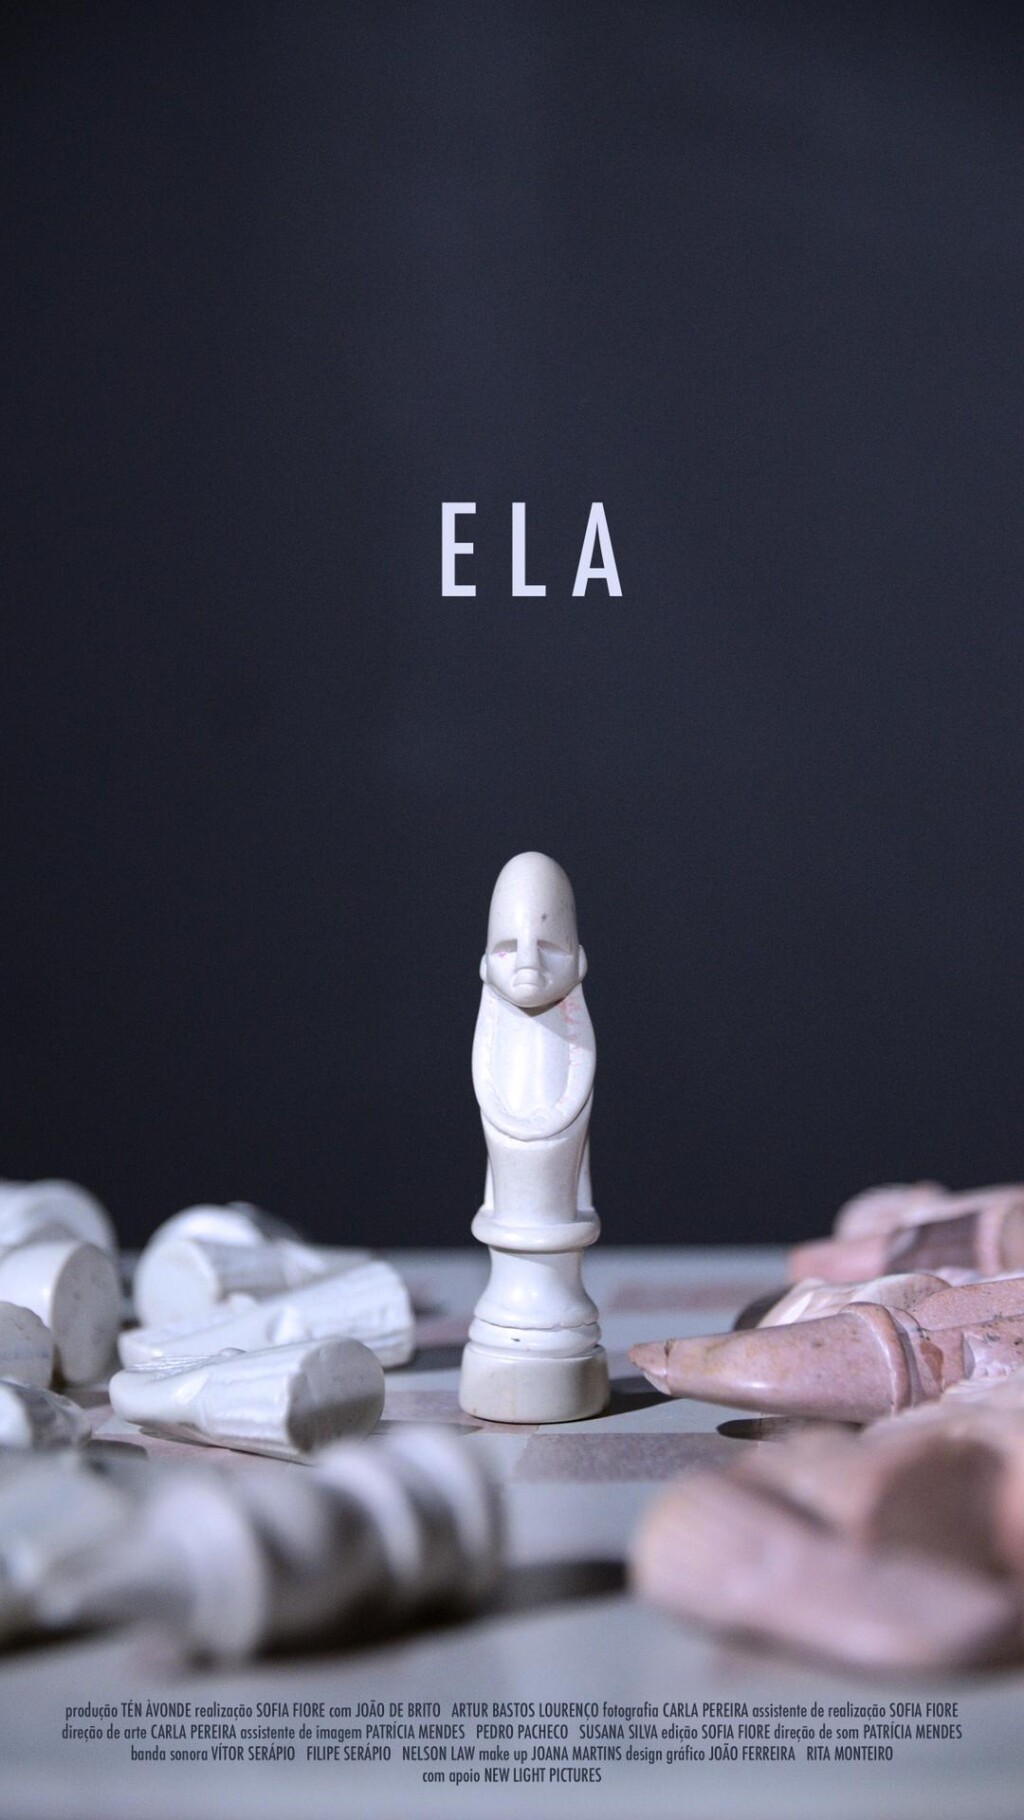 Filmposter for ELA